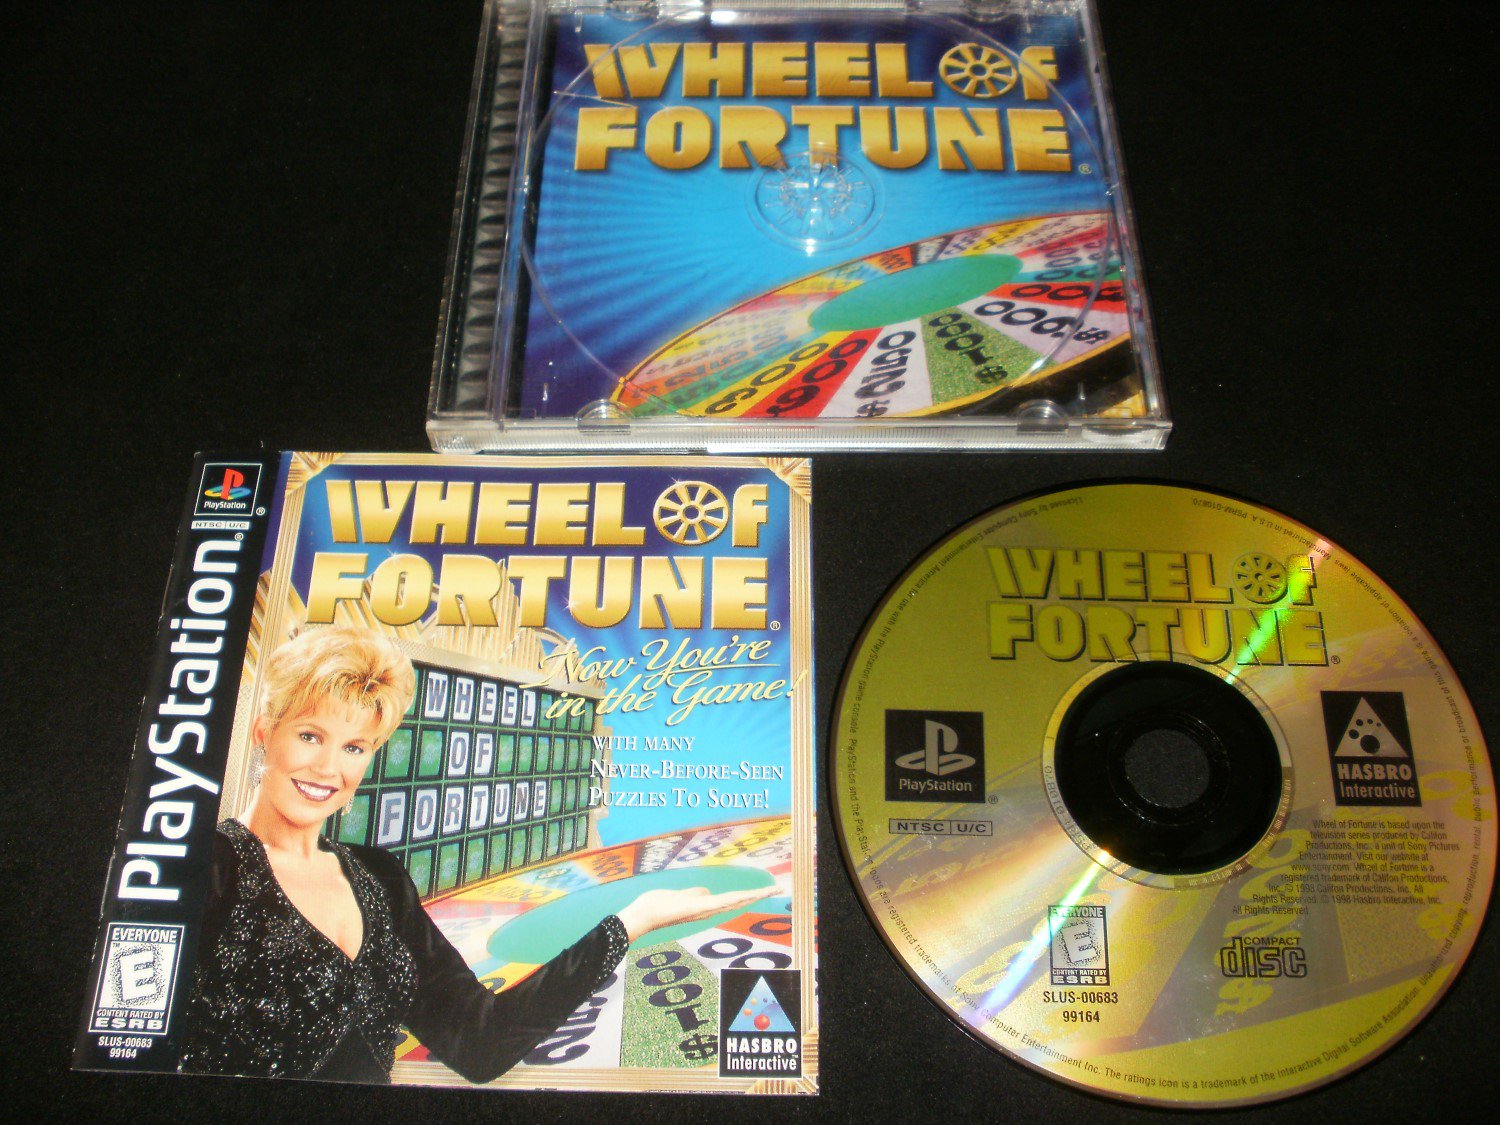 Wheel of Fortune - Sony PS1 - Complete CIB1500 x 1125